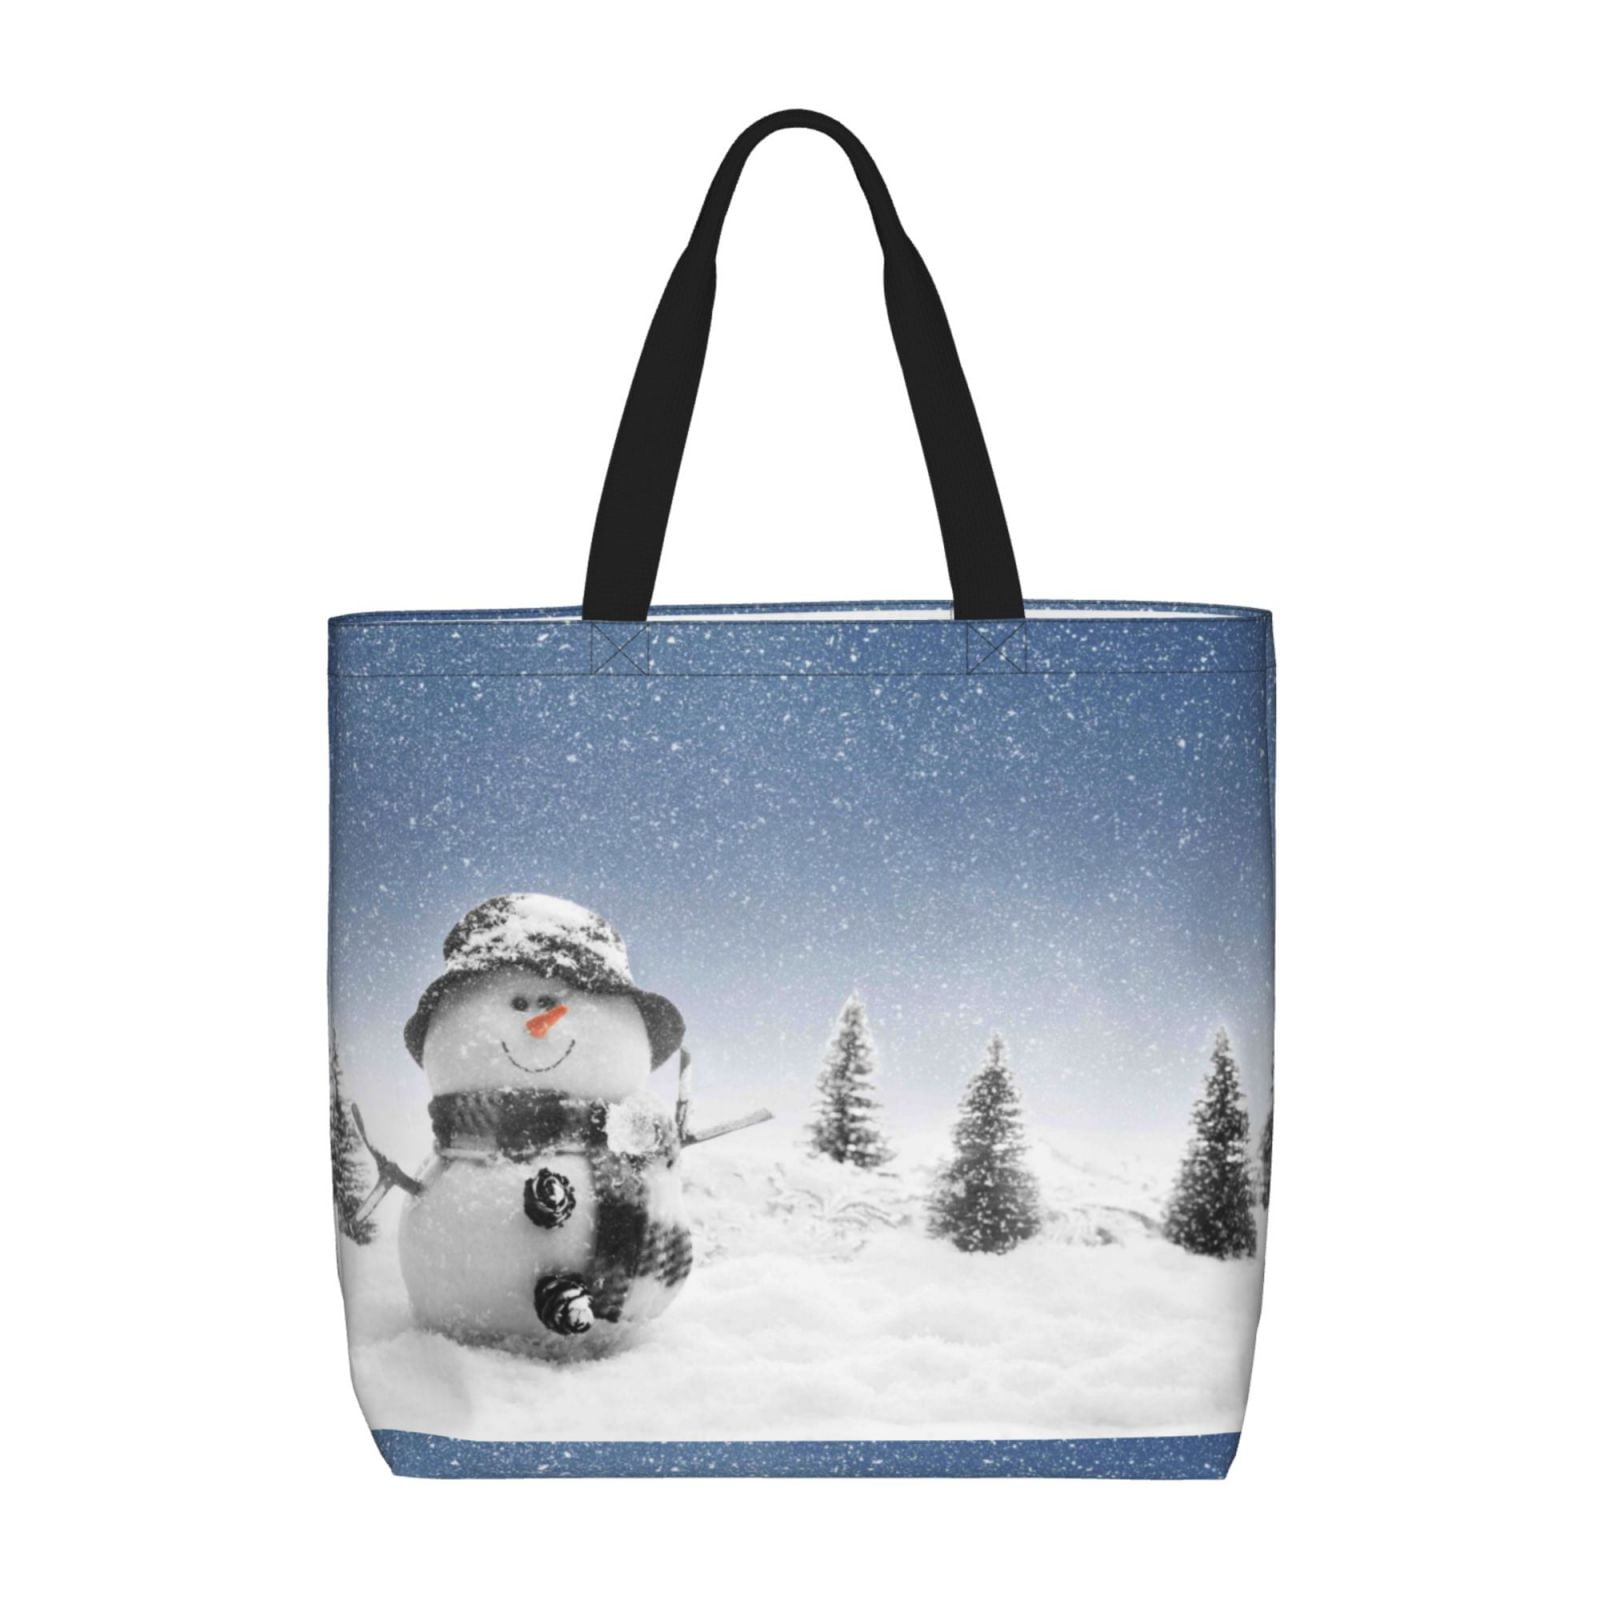 Adobk Snowman And Christmas Tree Print Tote Bags Shoulder Bag Beach Bag ...